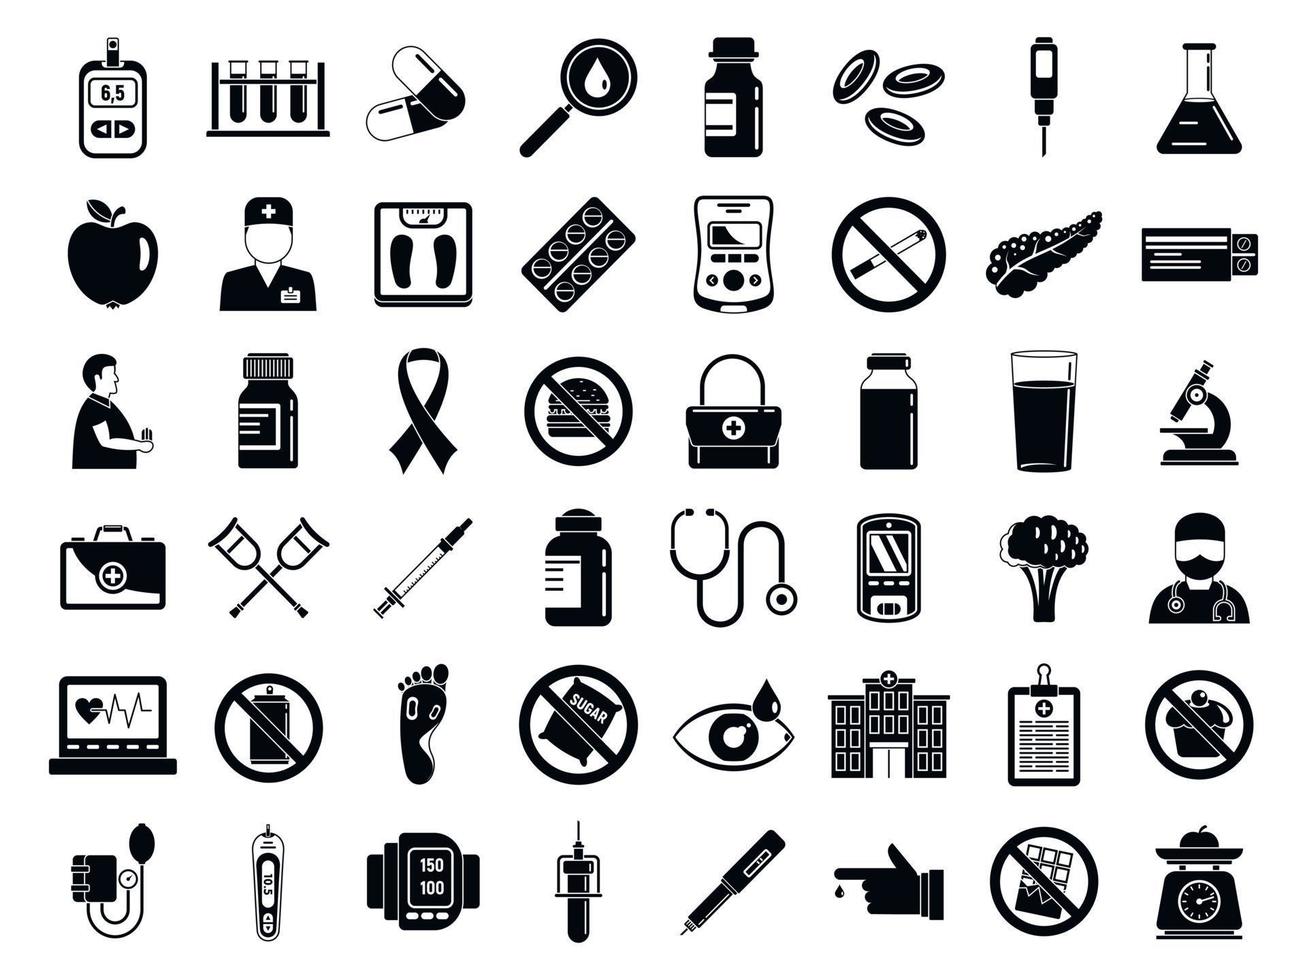 Diabetes disease icons set, simple style vector